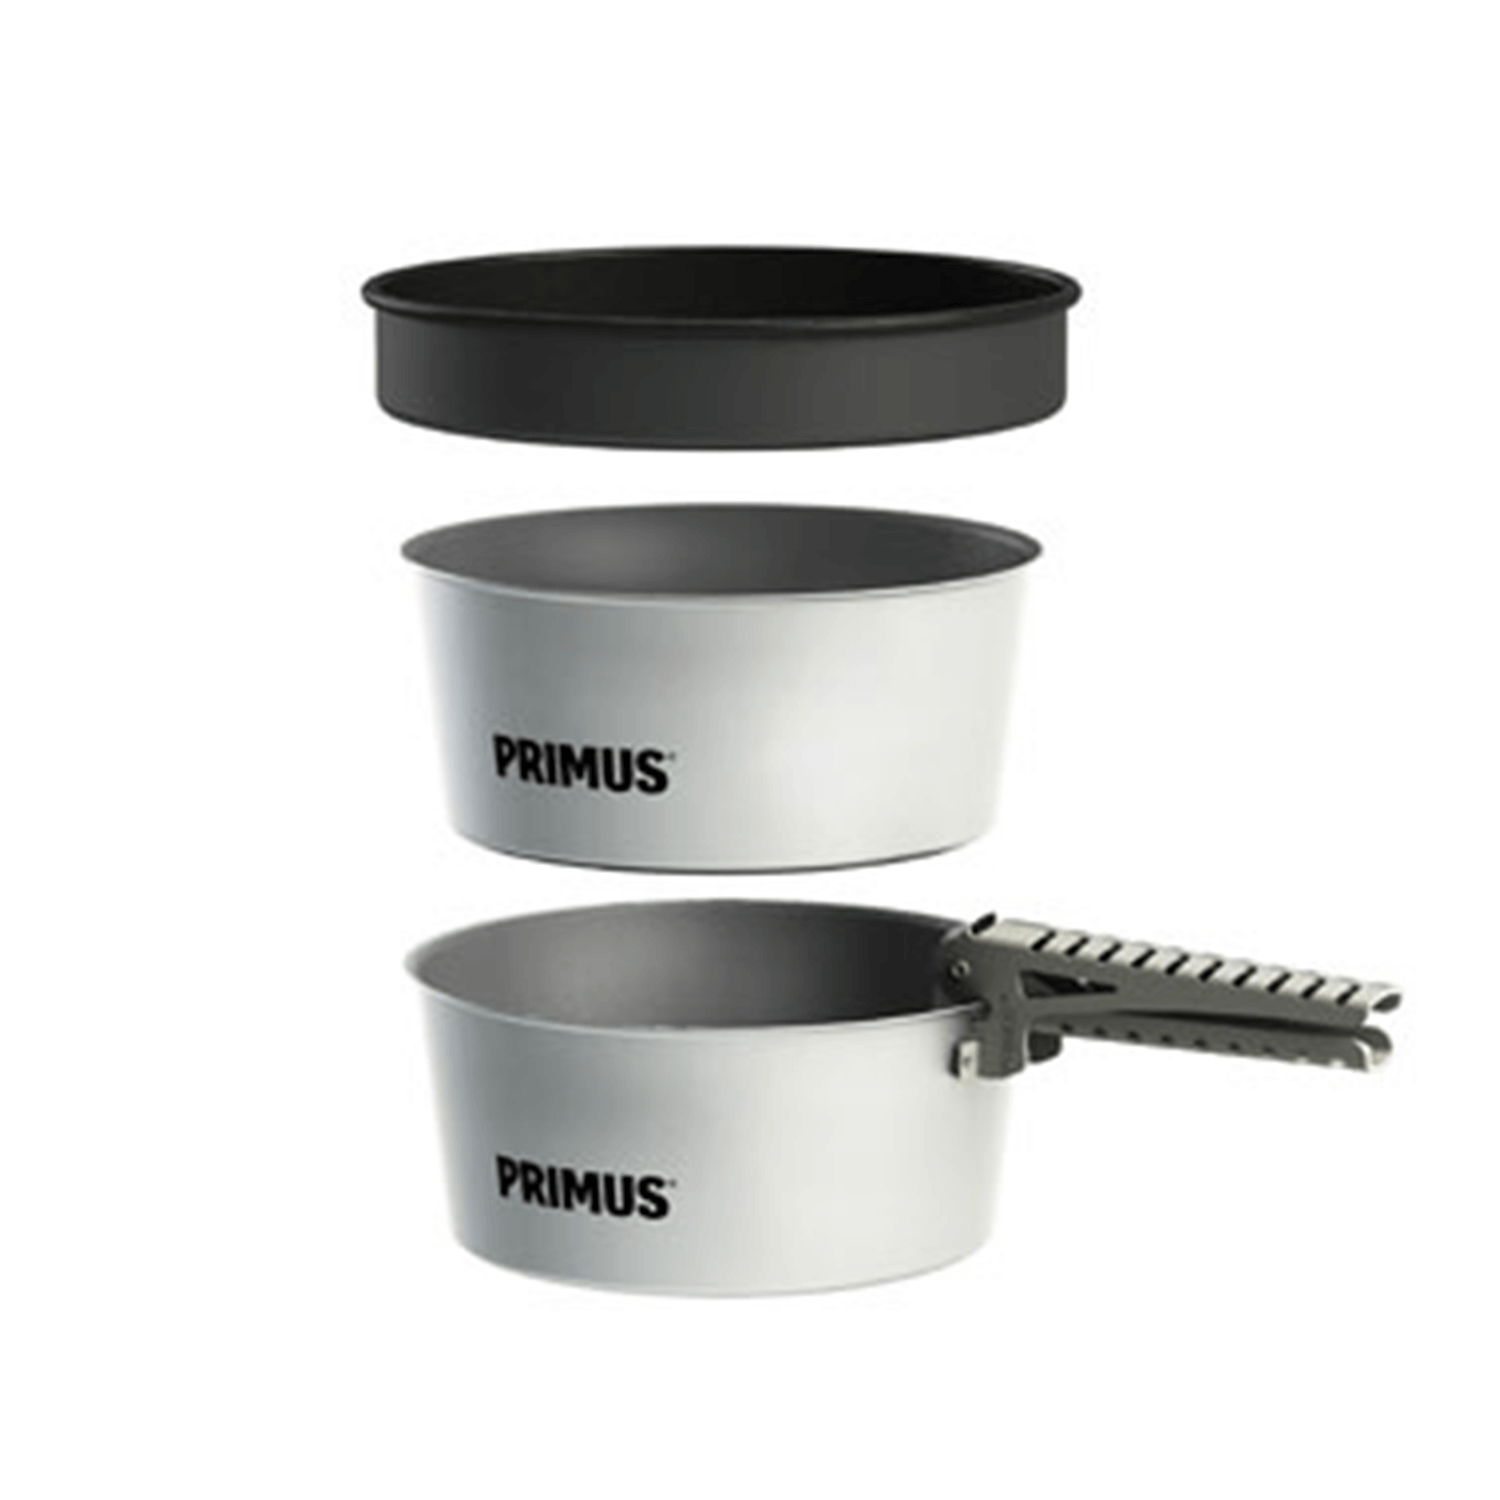  Primus Potset Essentials 2x1.3L - Buitenkoken